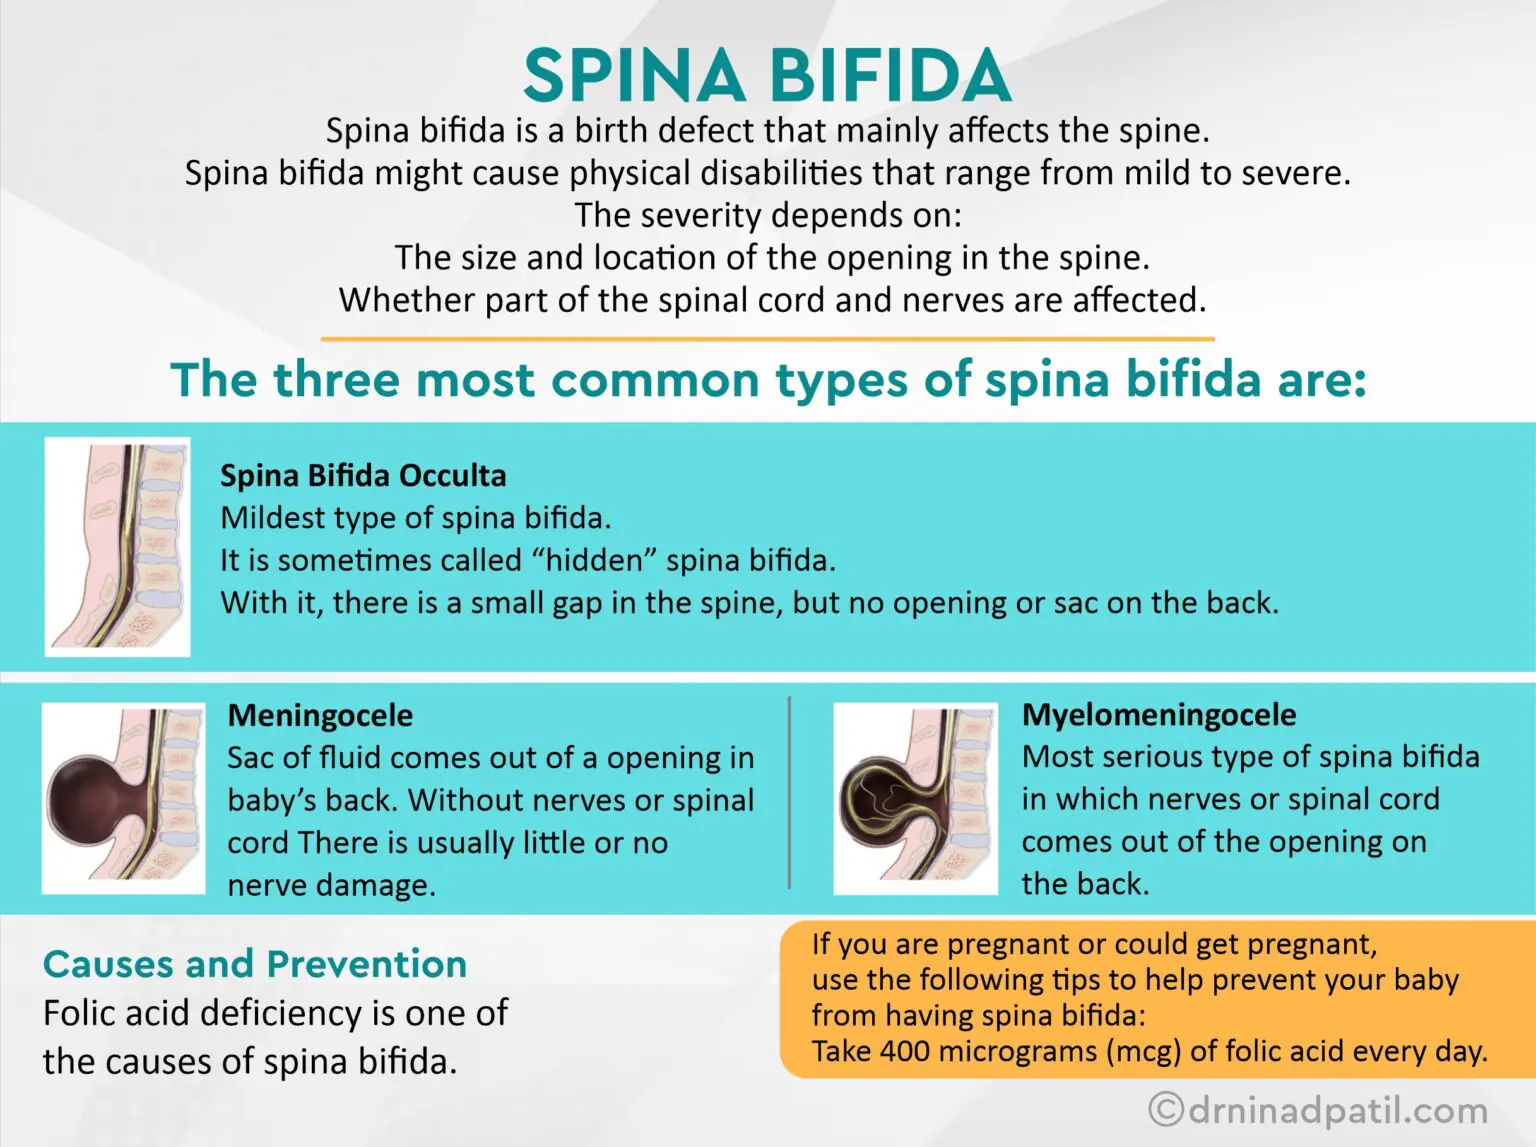 Spina Bifida Treatment in Pune | Dr.Ninad Patil